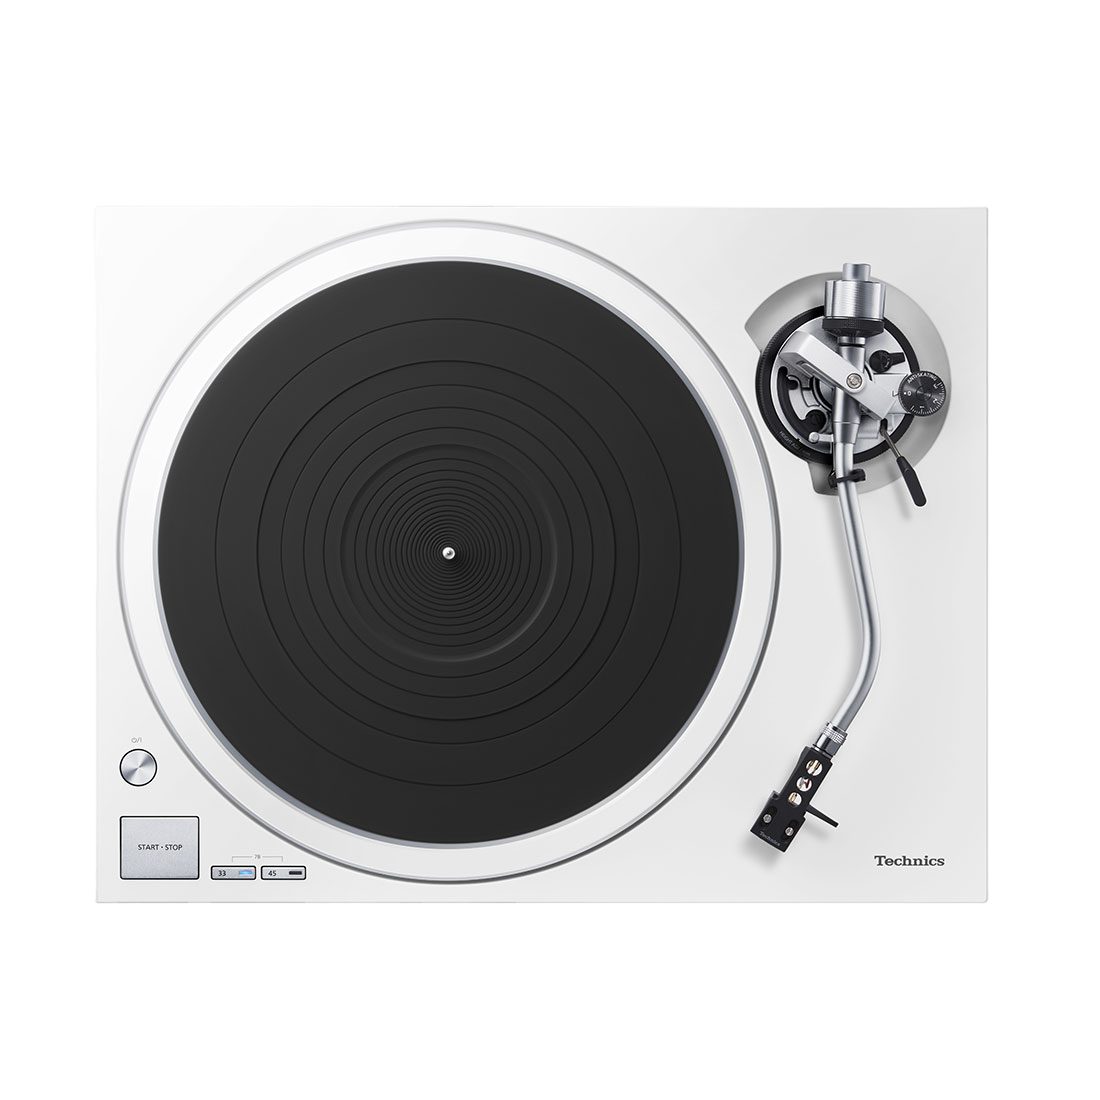 SL-1500C | Record Player